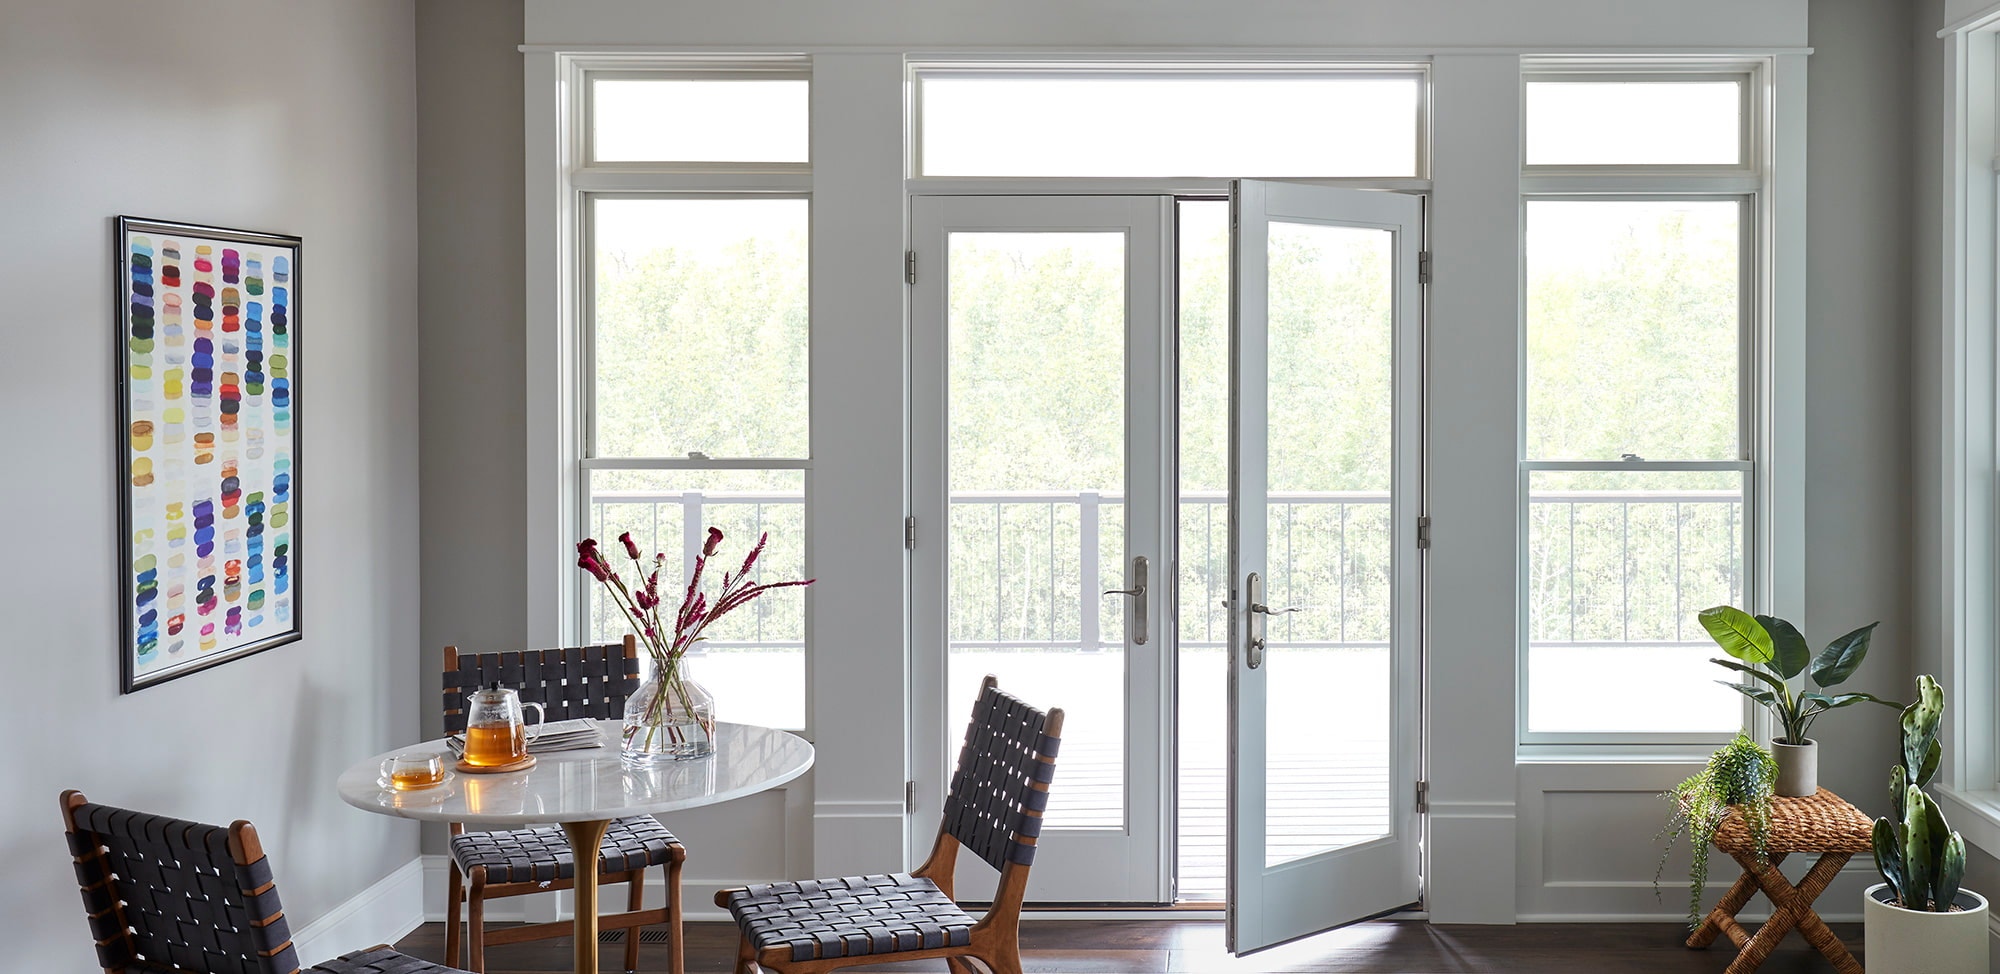 pella lifestyle series windows beige walls